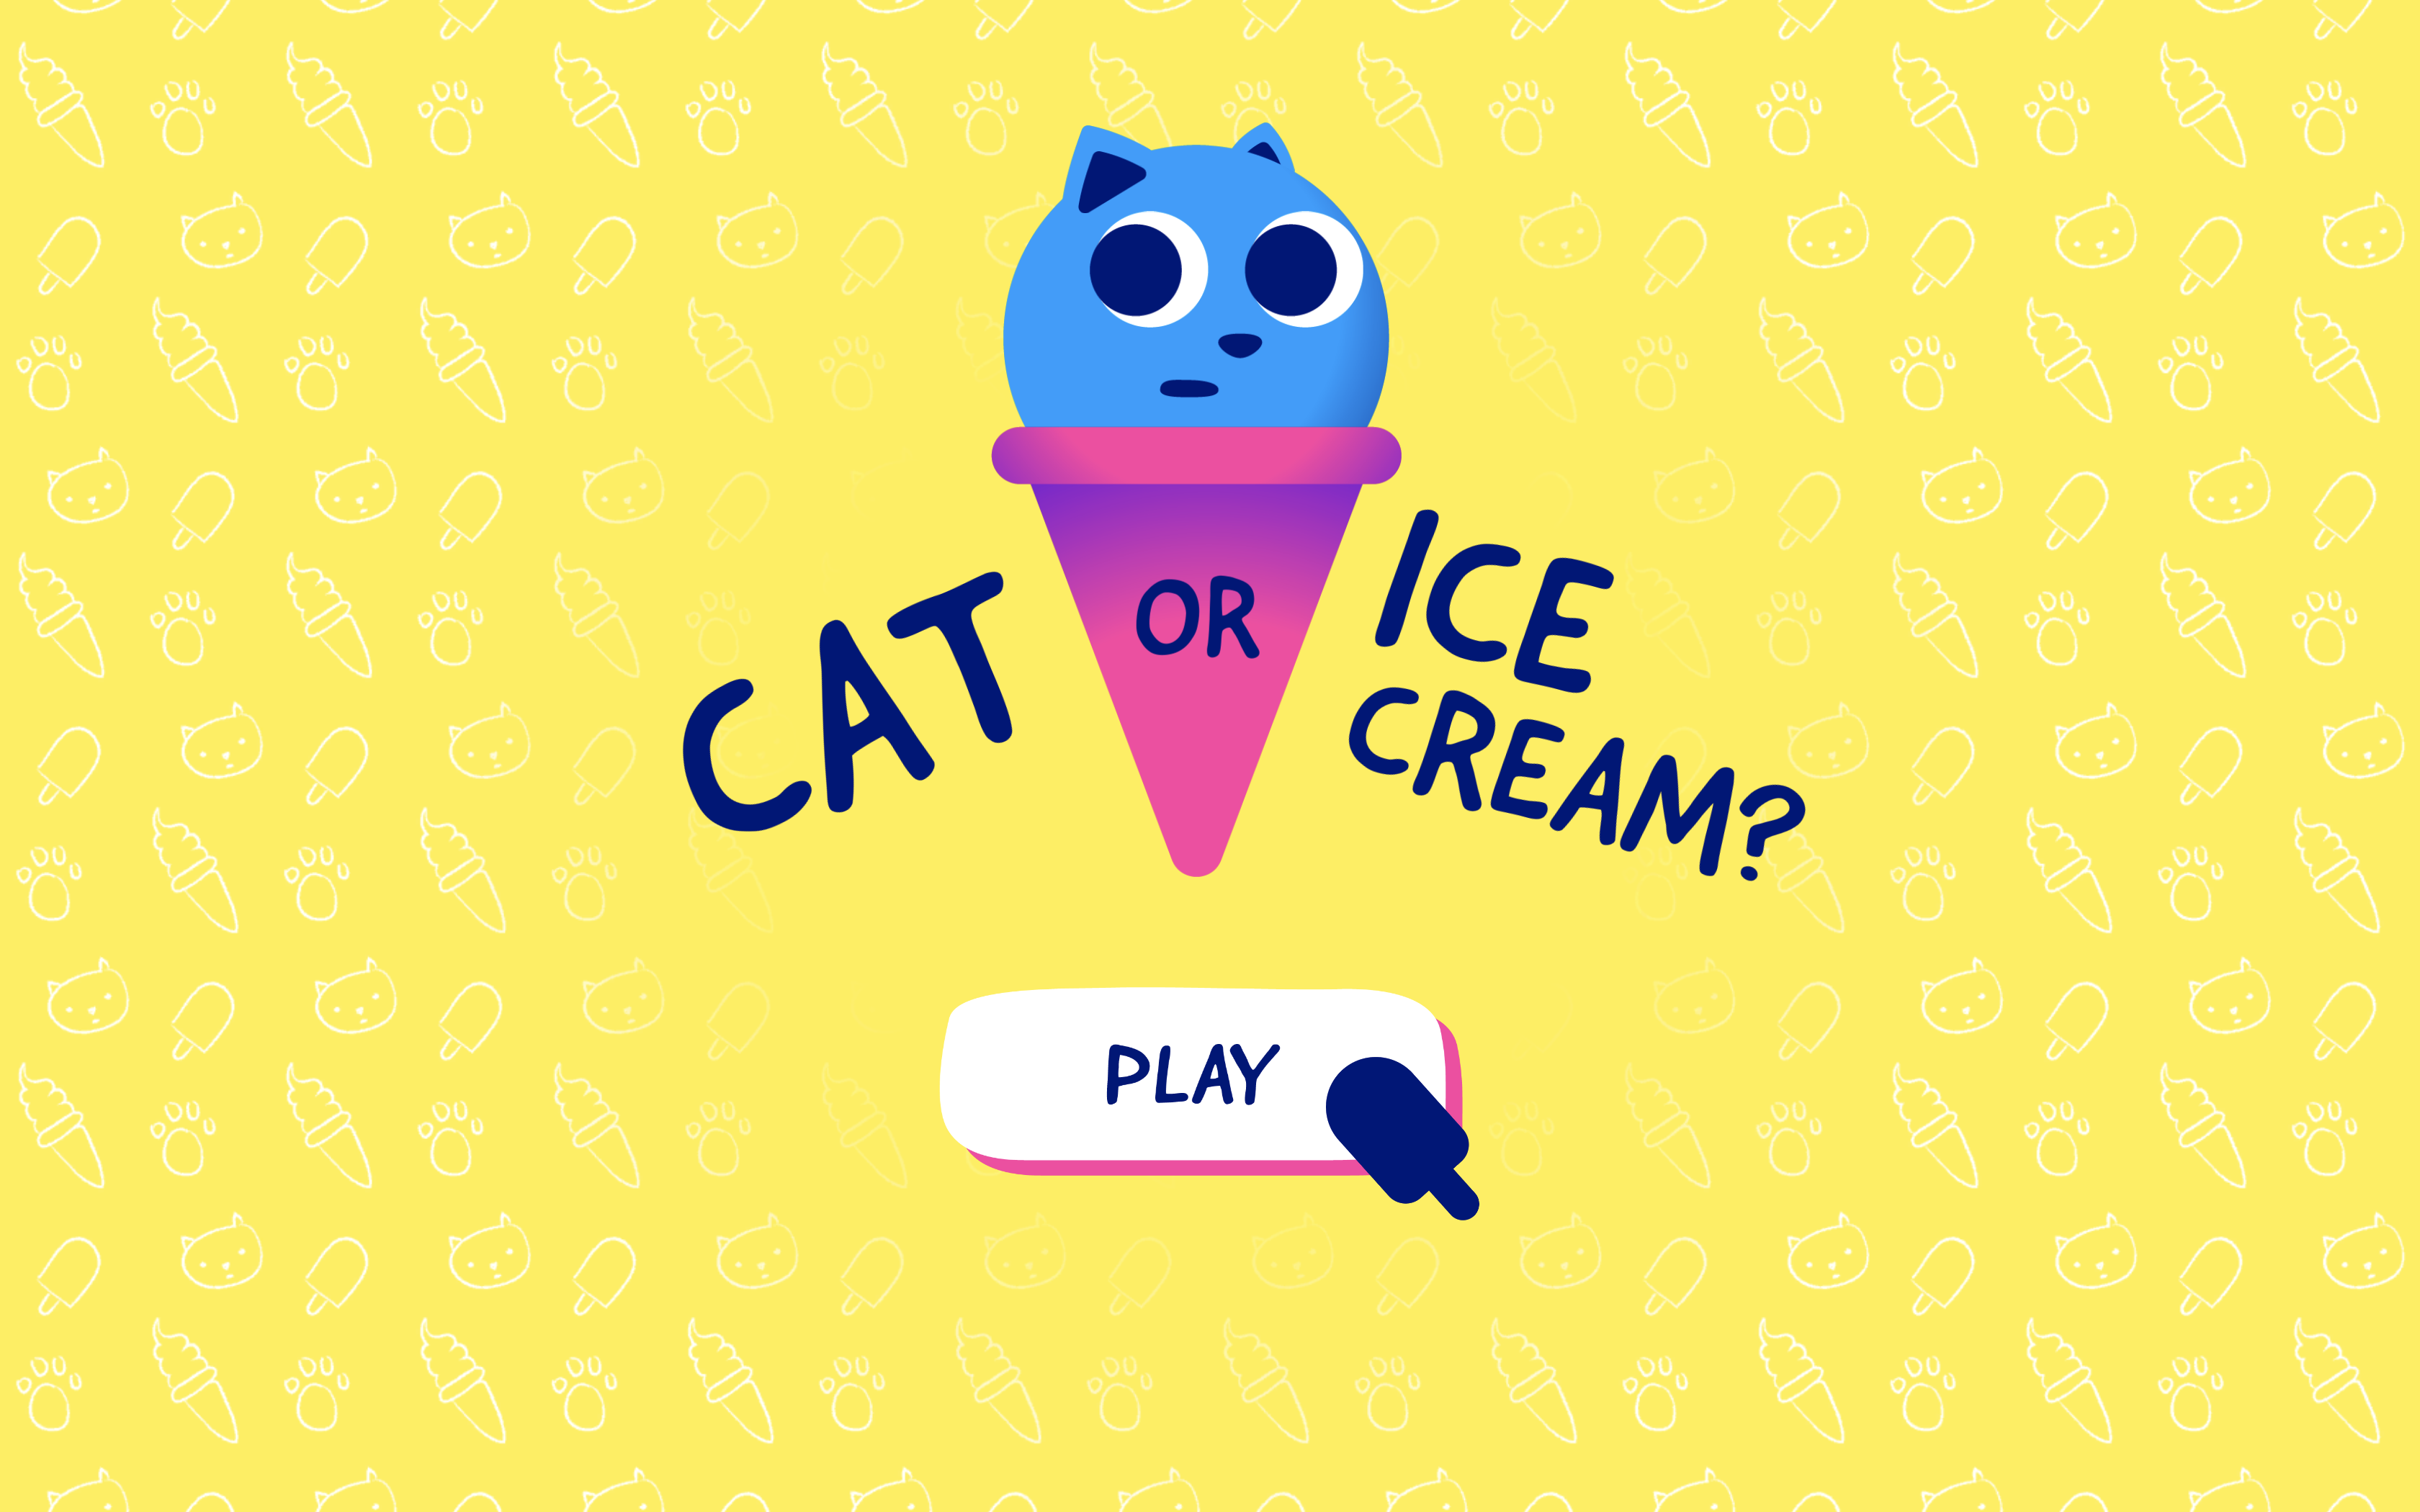 Cat or Ice Cream? by cookiecrayon